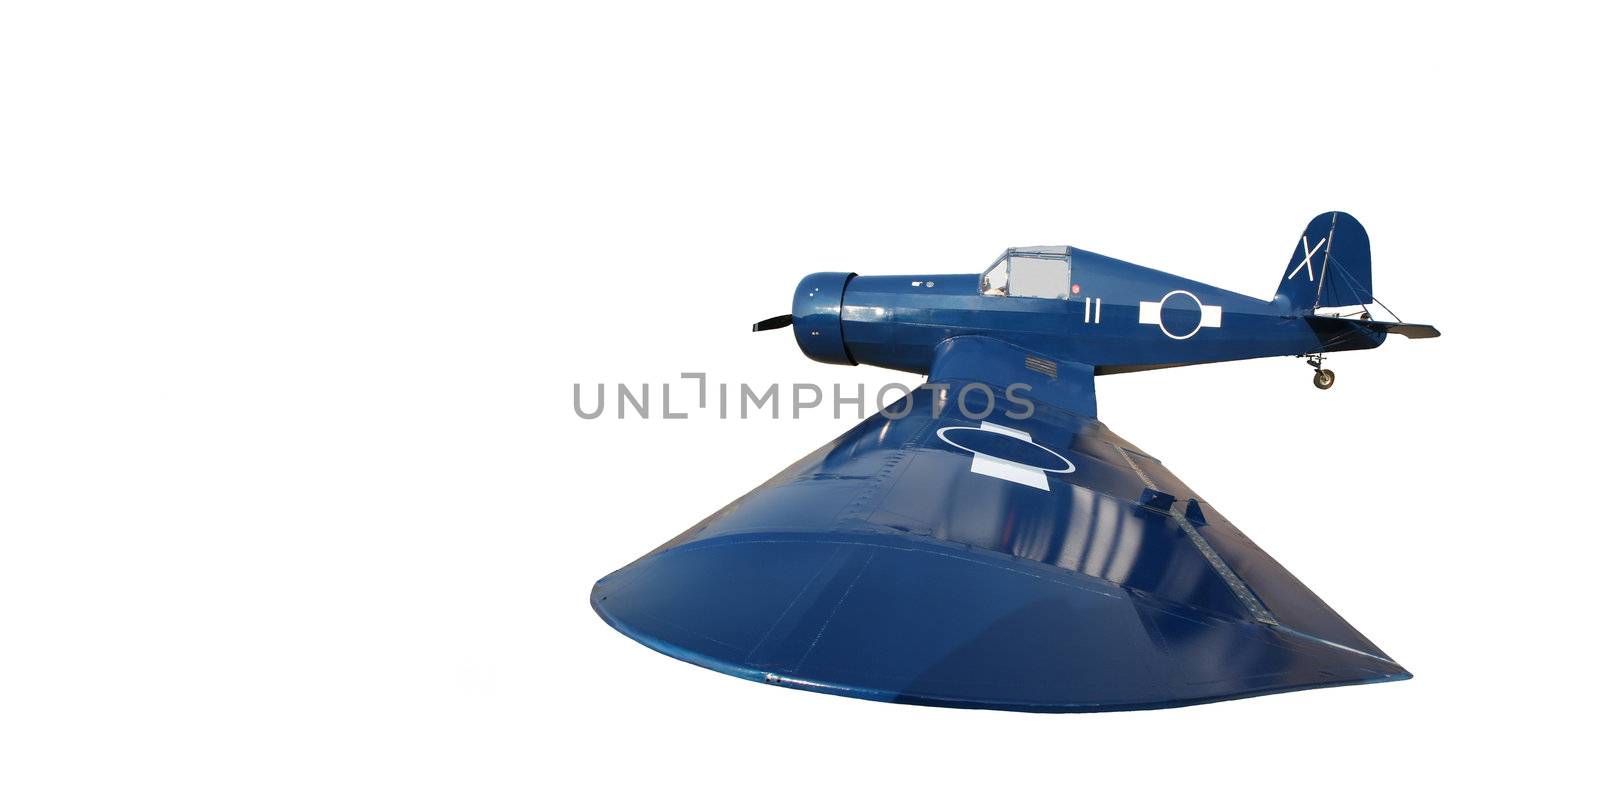 Model of a blue plane